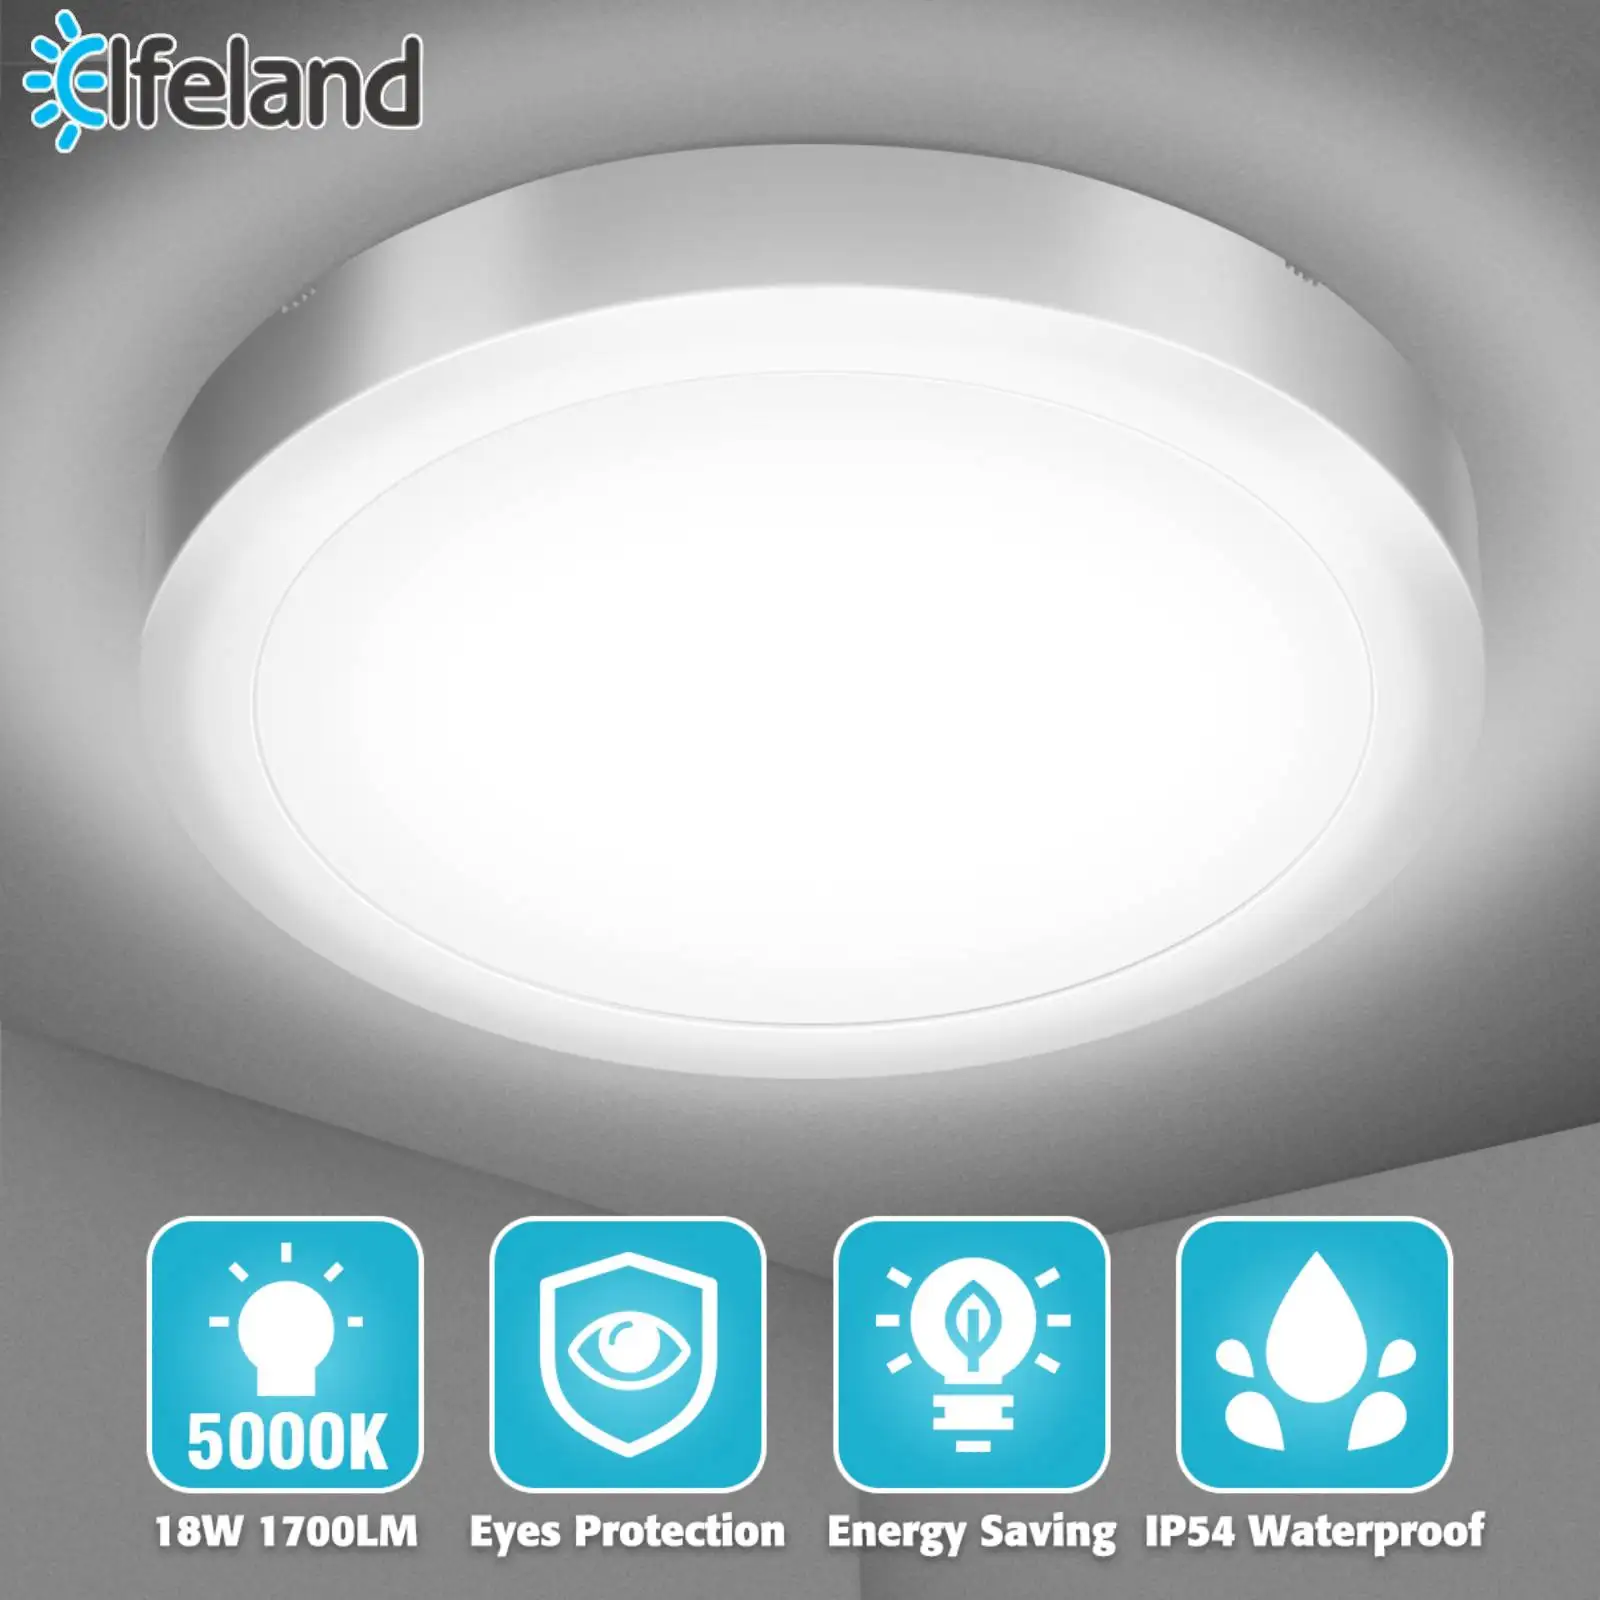 Elfeland LED Ceiling Light 18W 23CM 2835 SMD Modern Plating Round AC85-265V 5000K for Indoor Bedroom Lighting Energy Saving